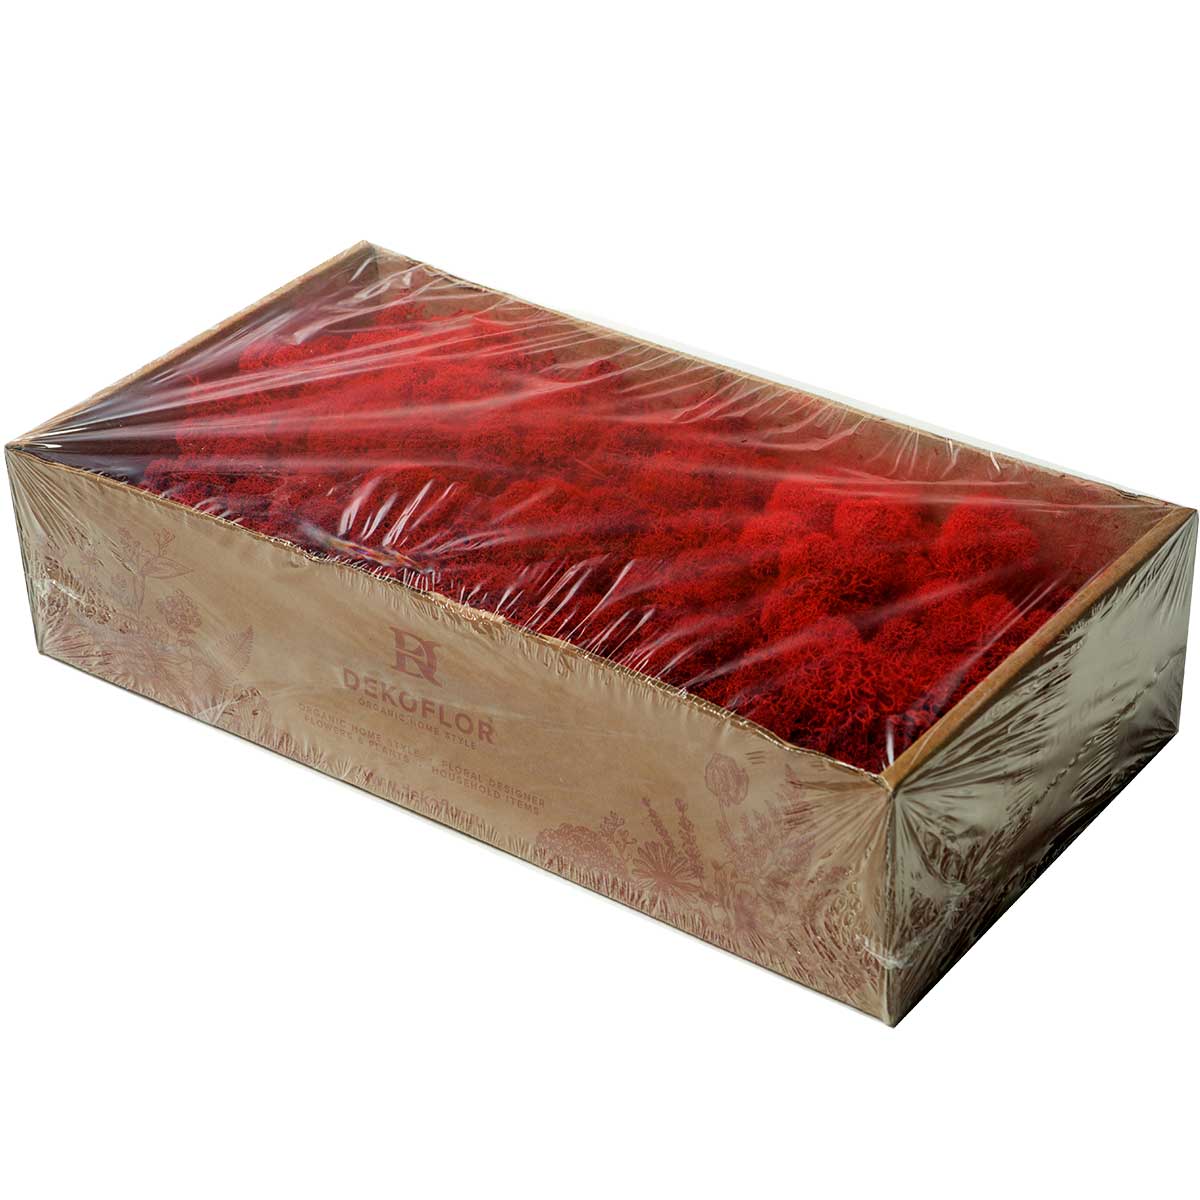 Lir/0557 lichen stabilisée rouge w-box 0,5 kg